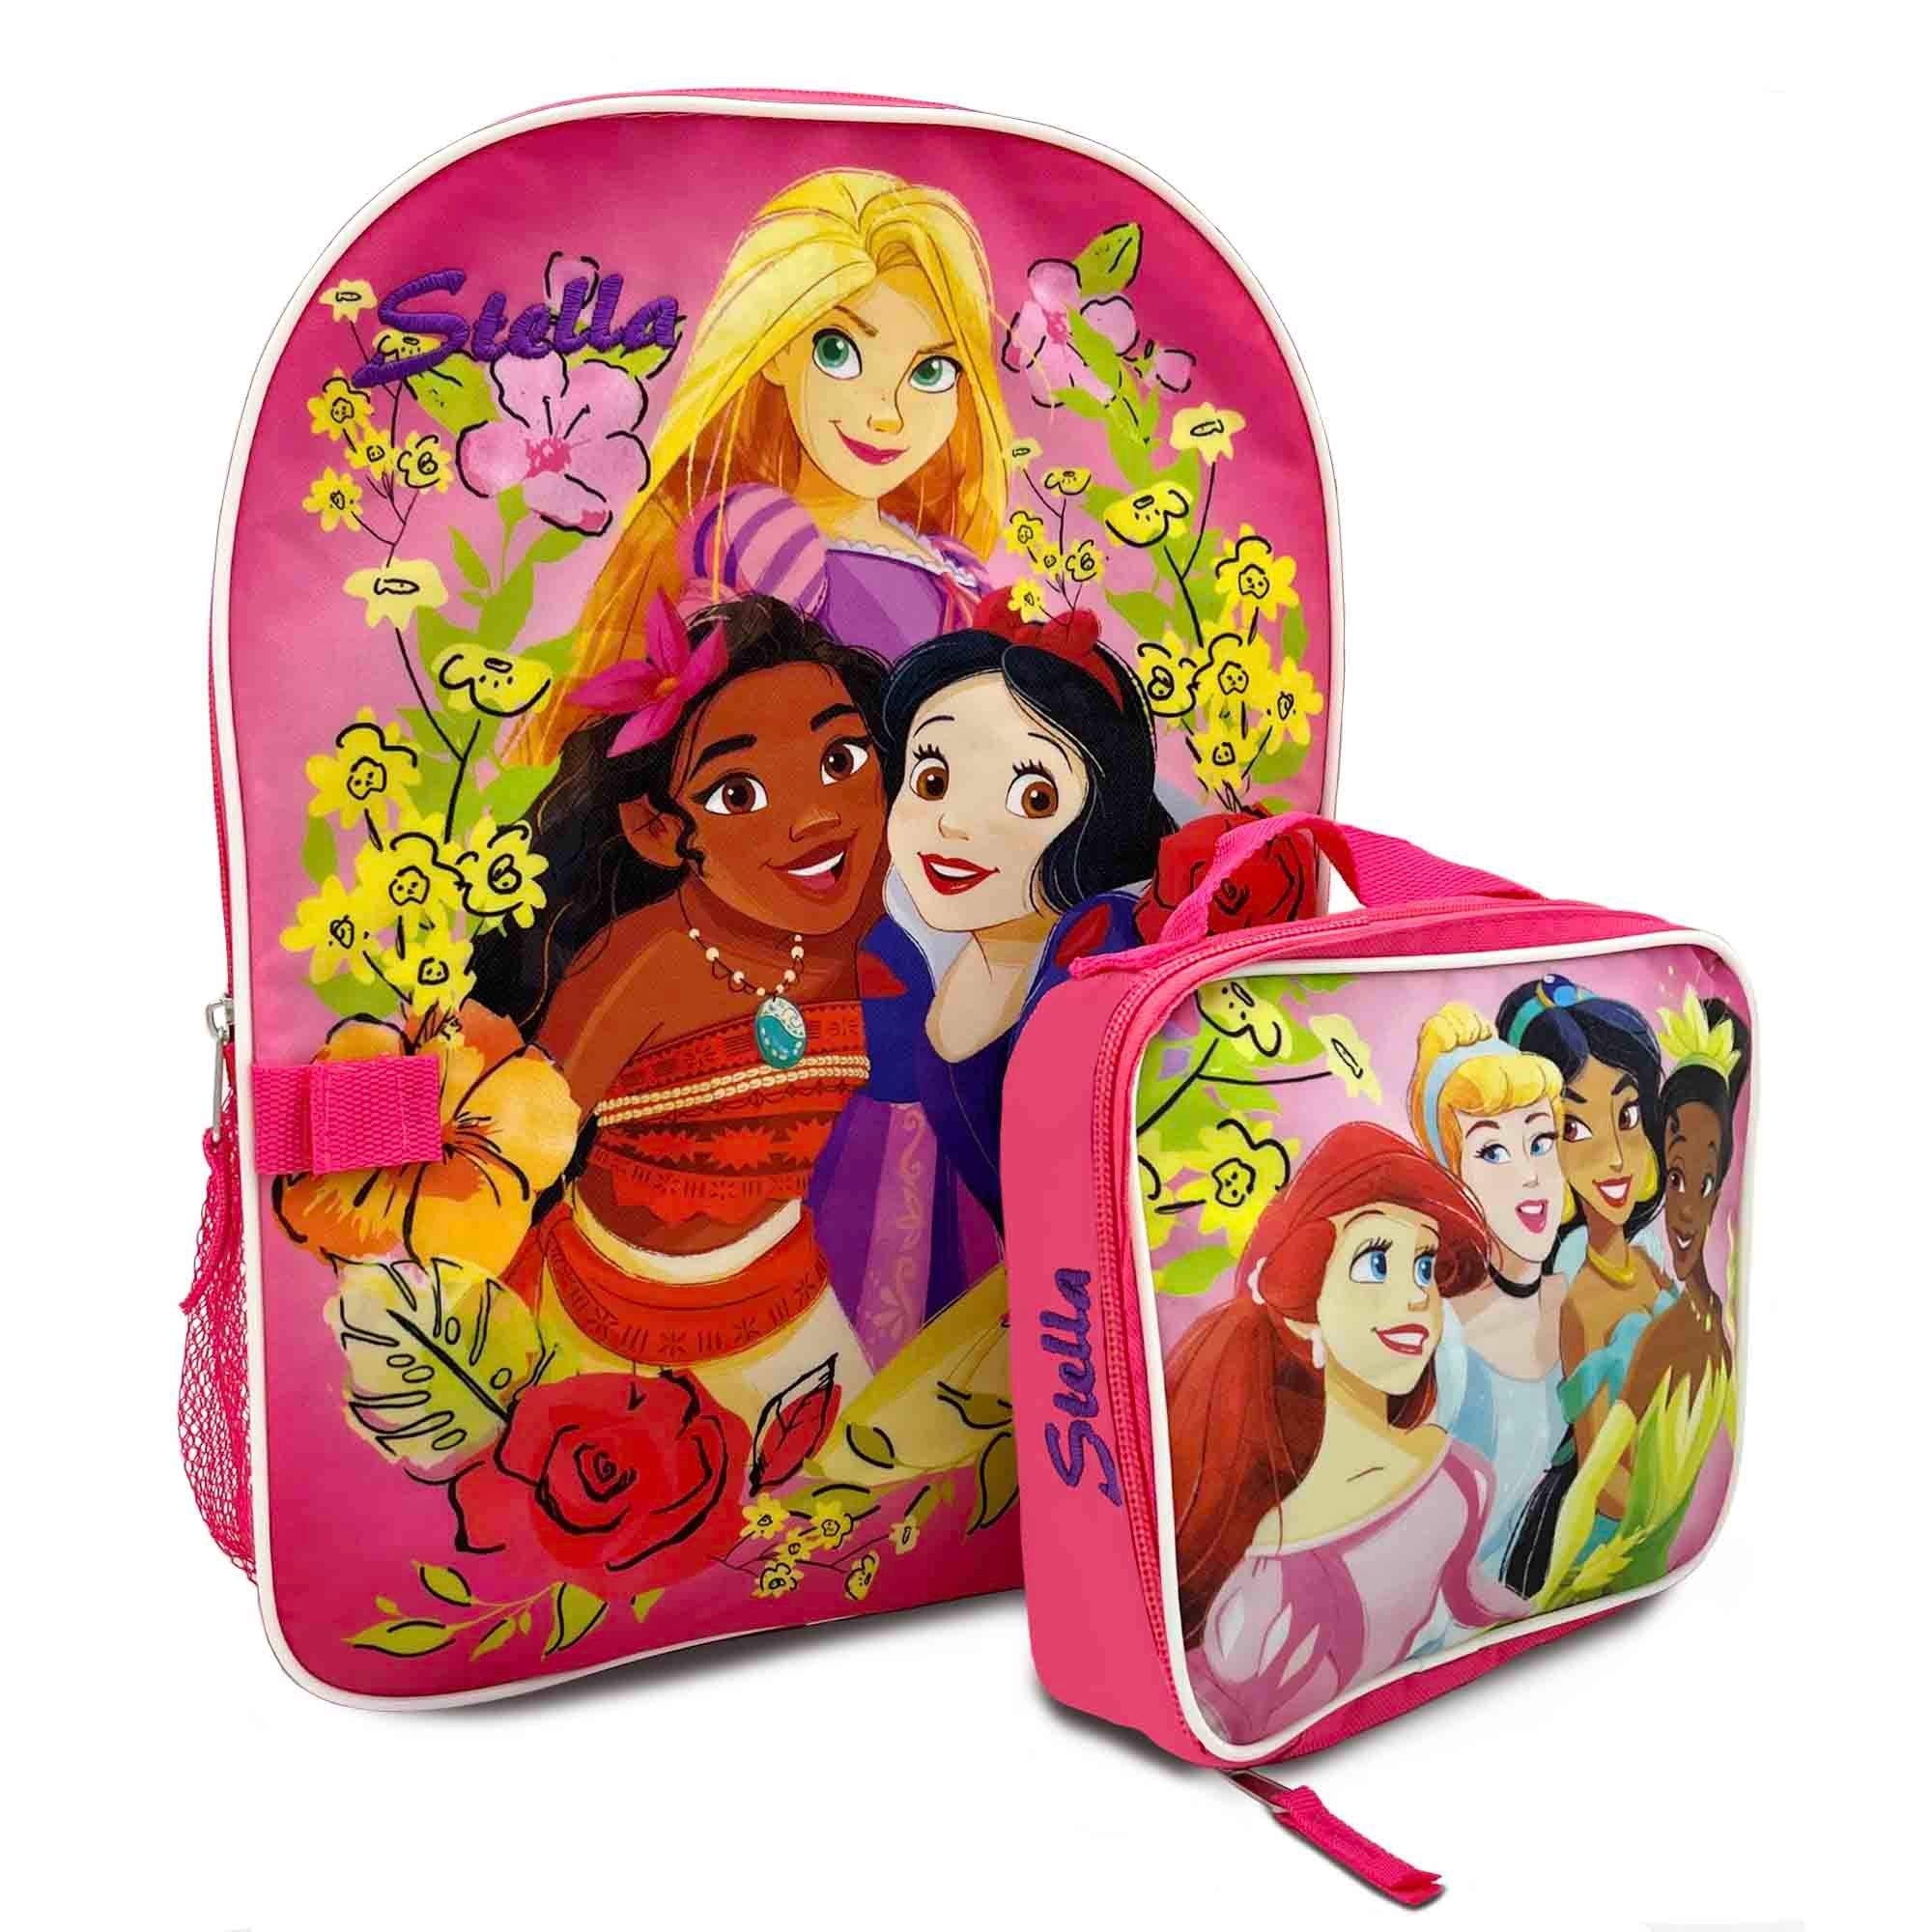 Disney Shop Disney Frozen Backpack and Lunch Box Bundle Set